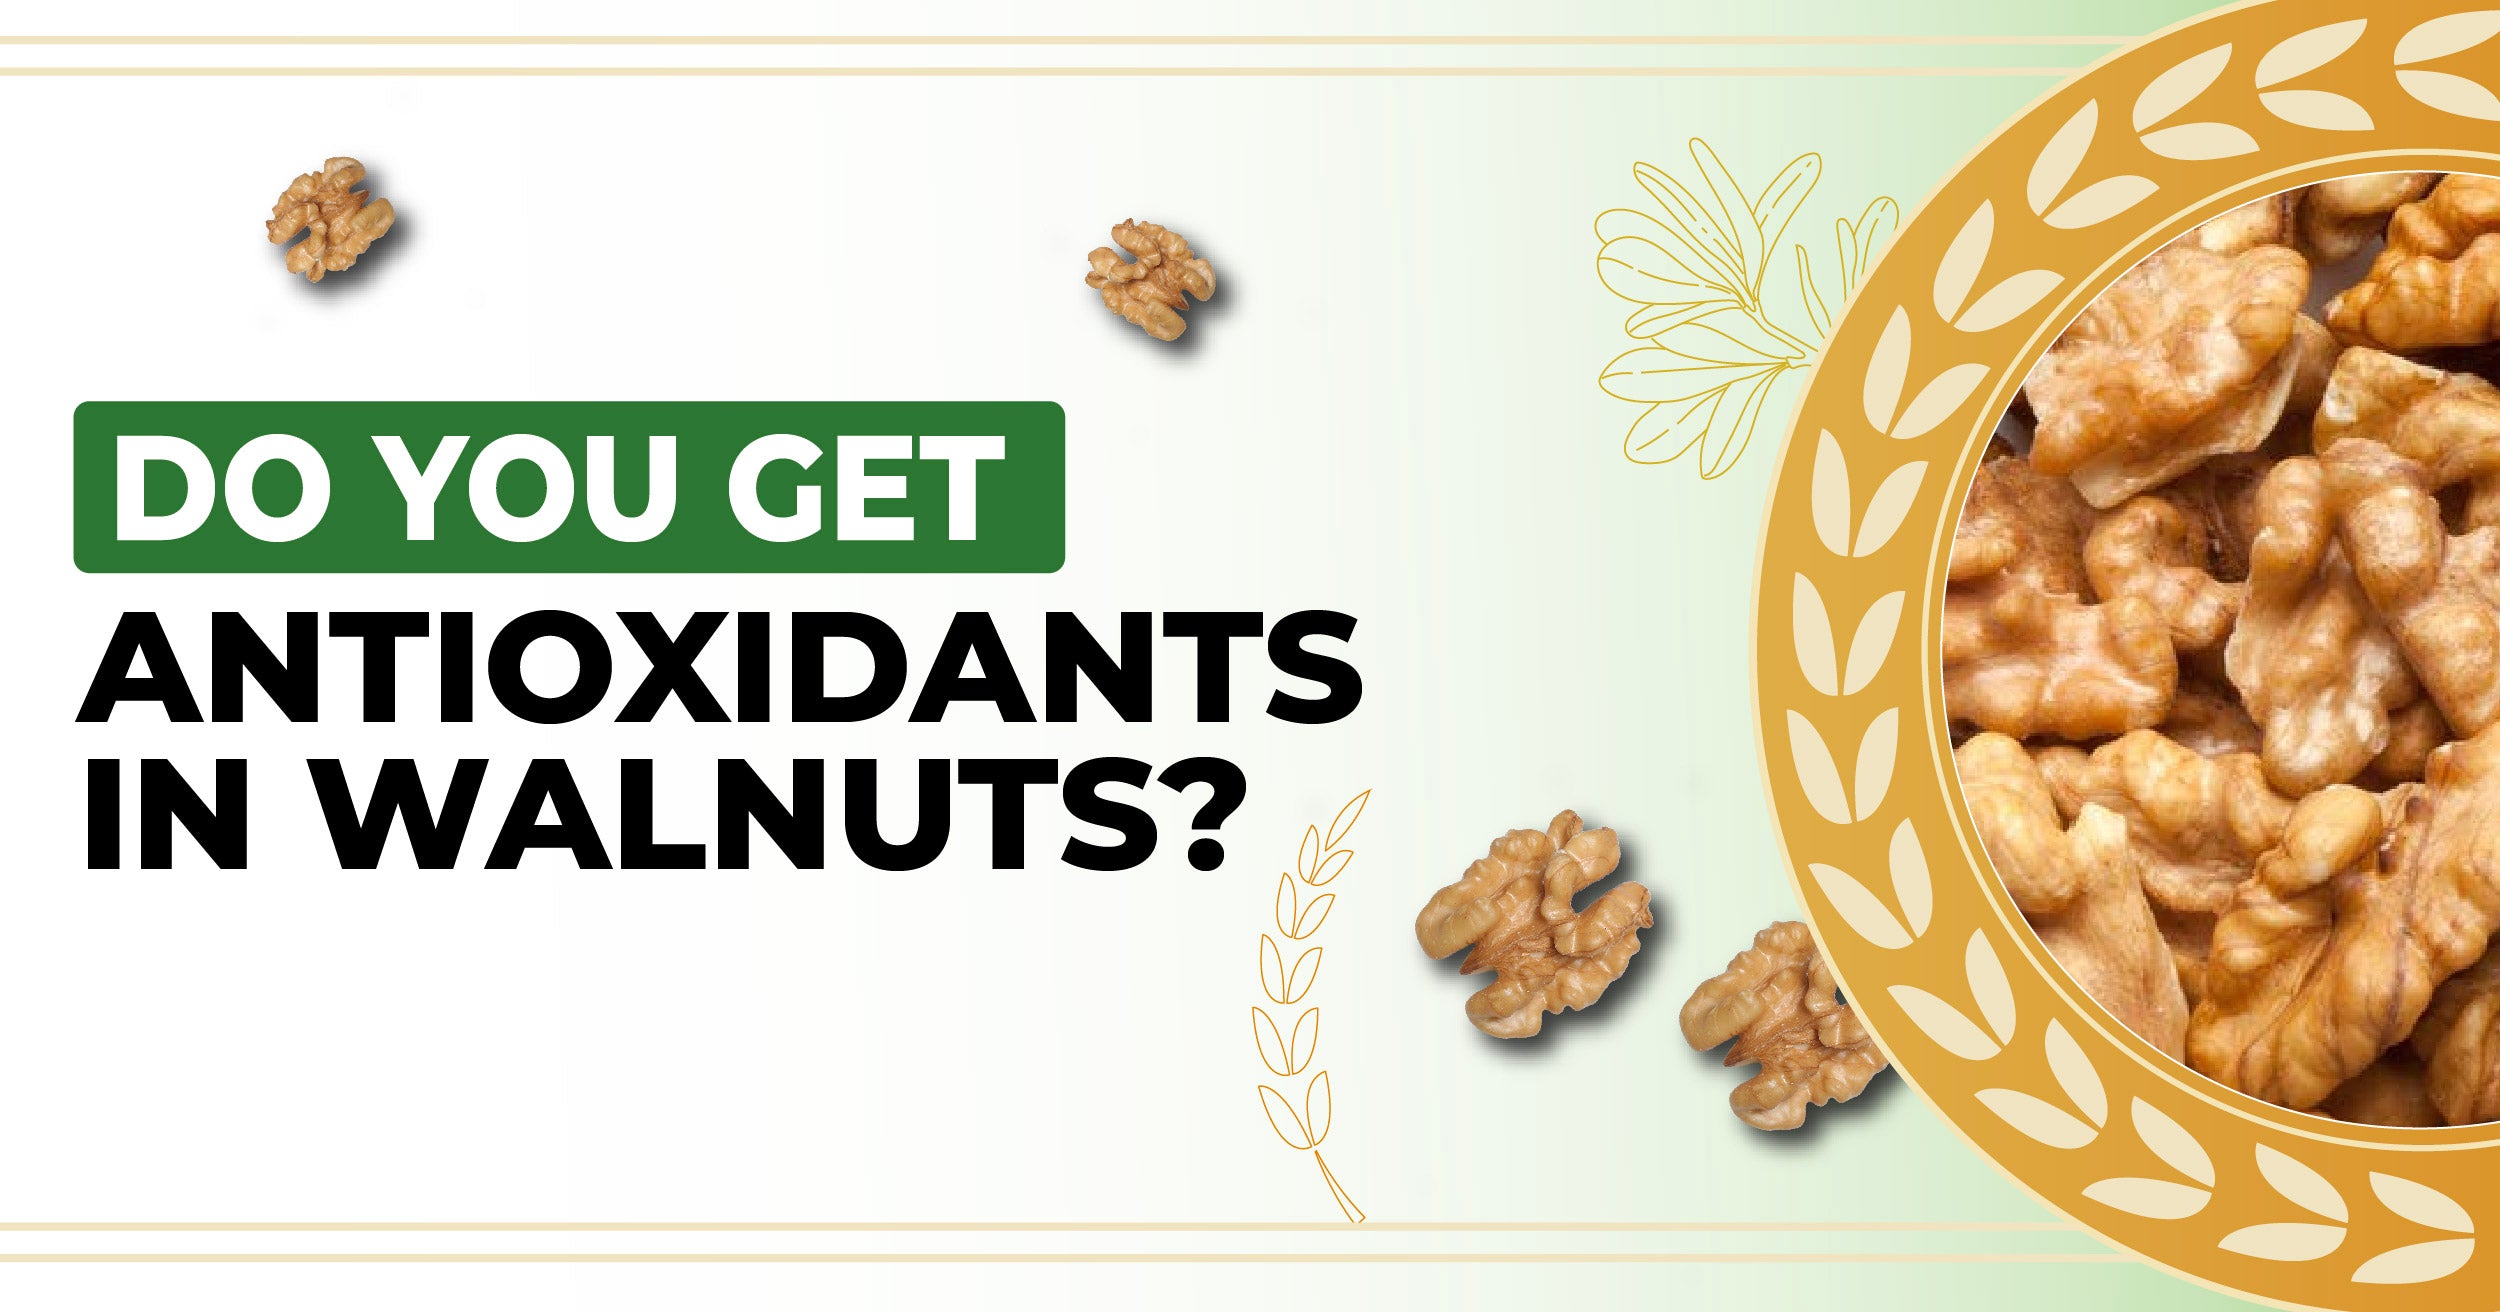 Walnuts as a good source of Antioxidants